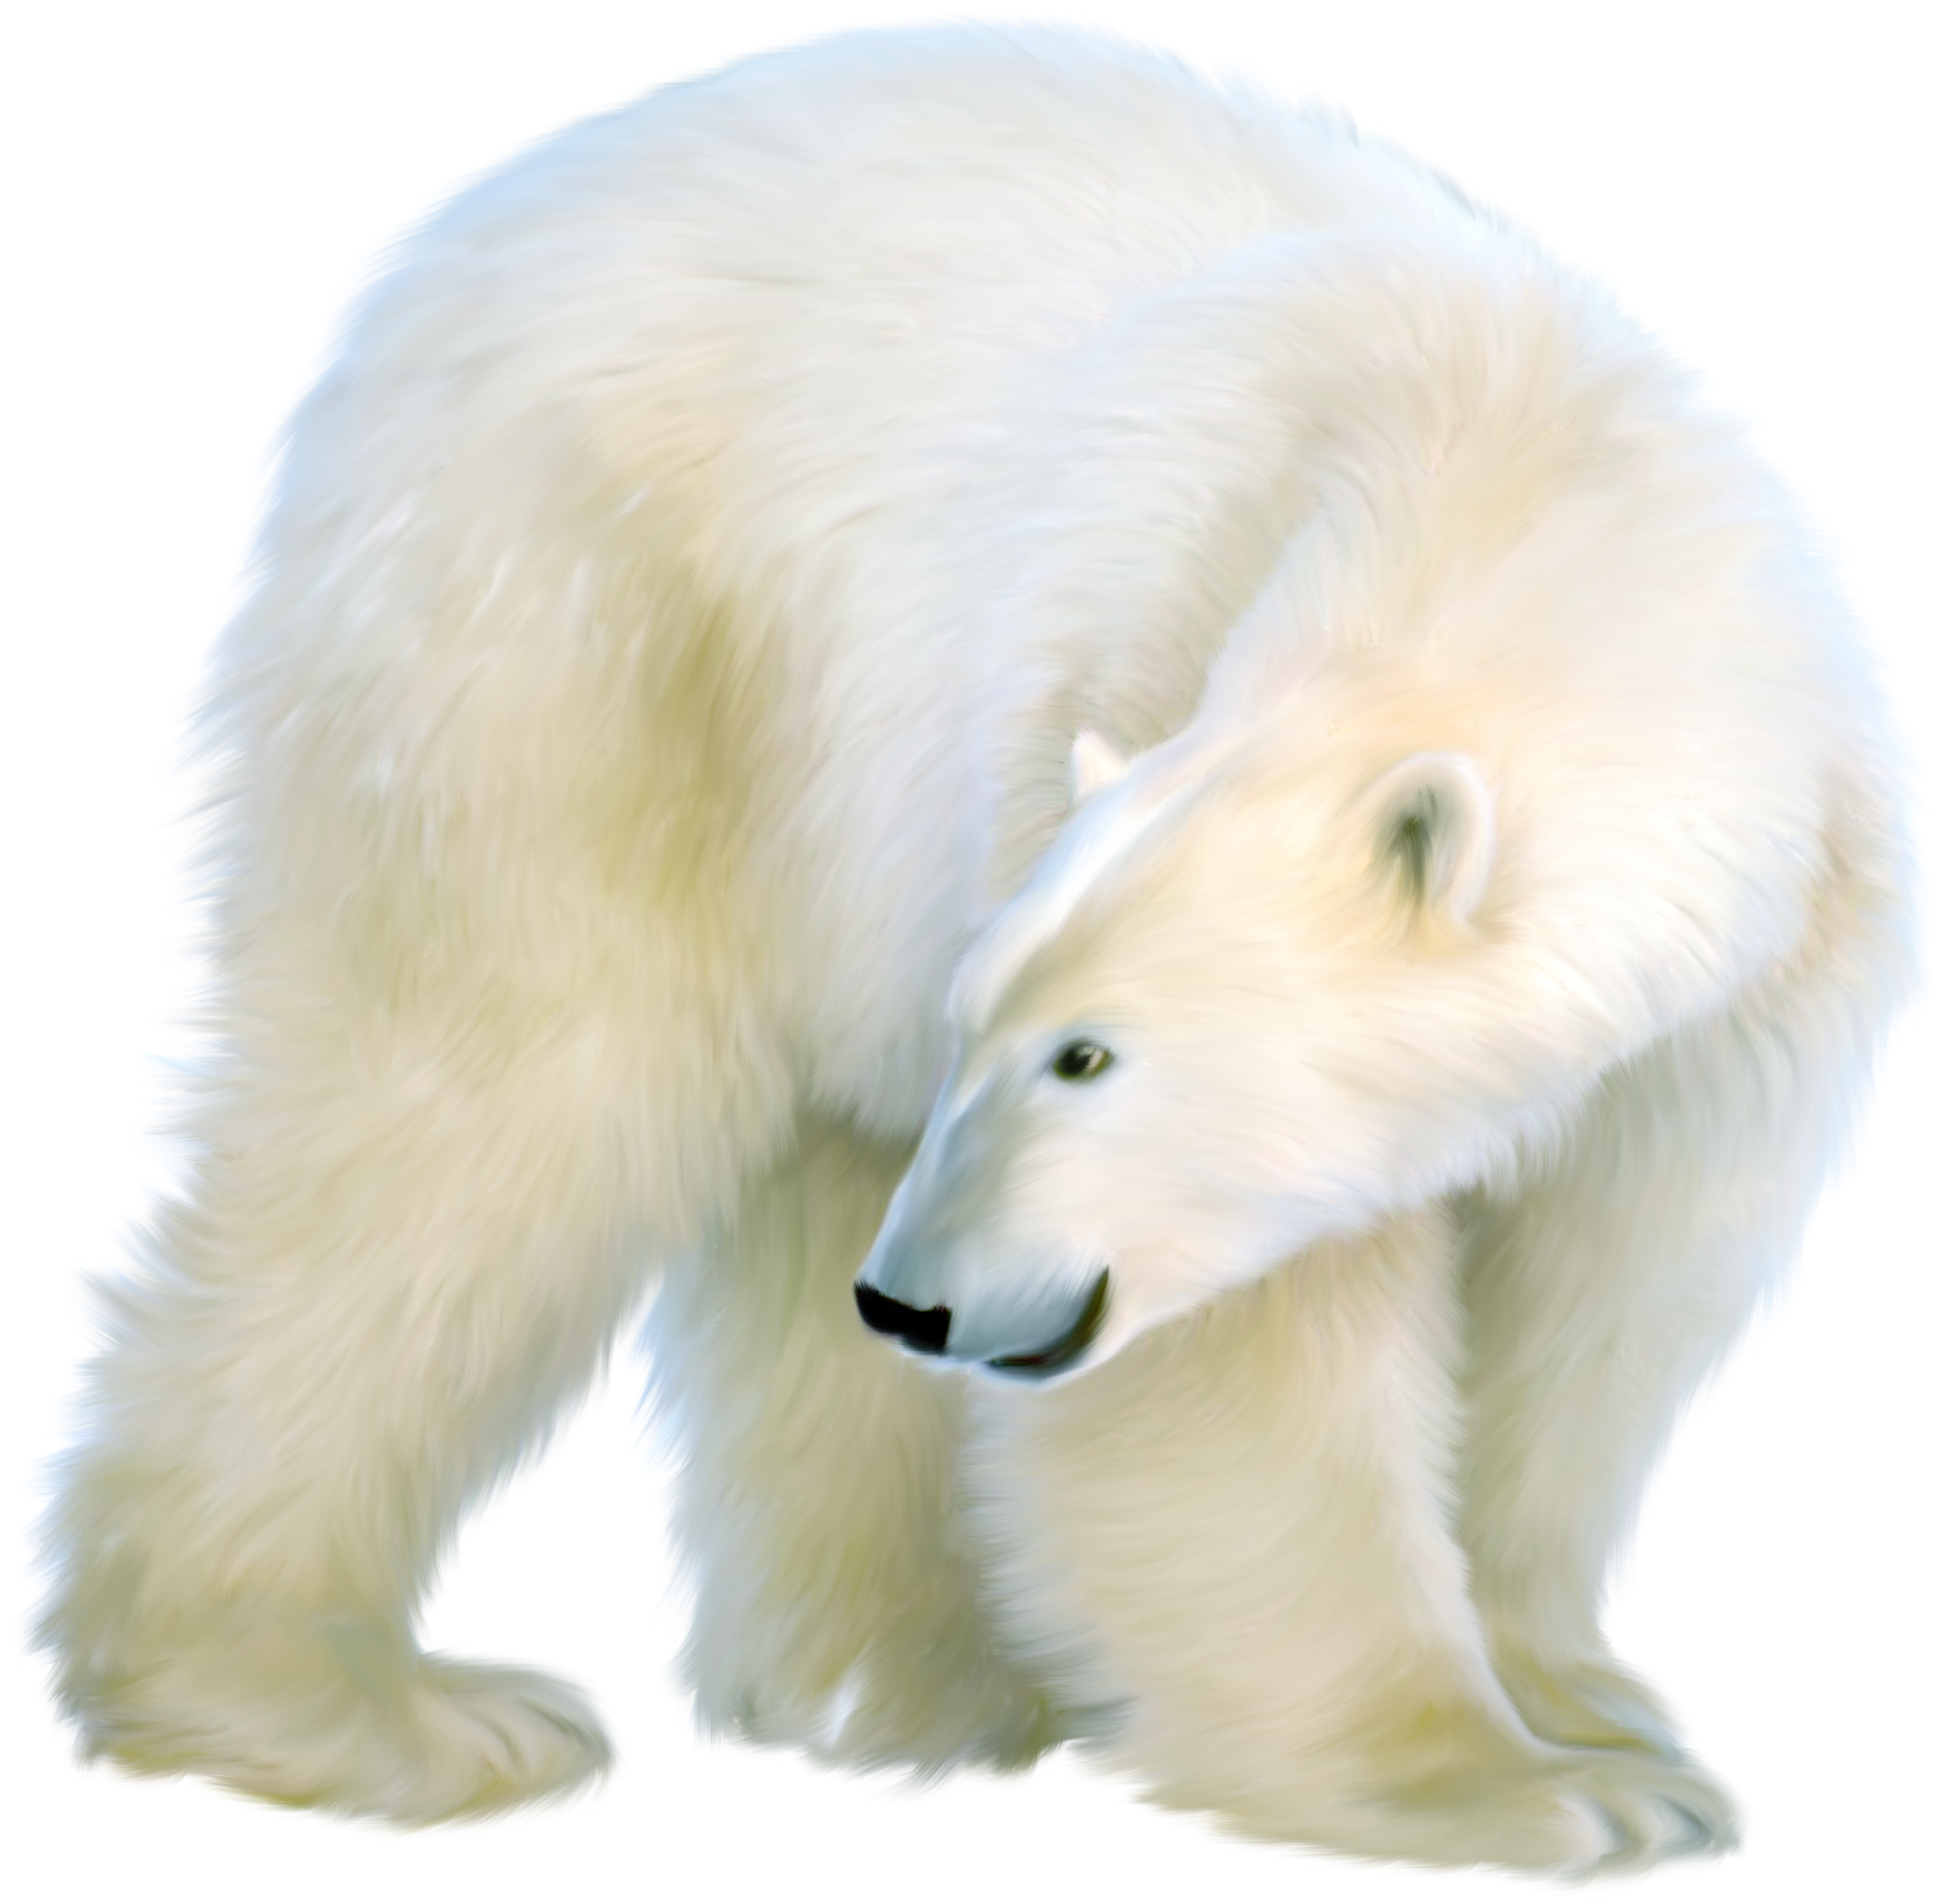 A White Polar Bear With Black Background